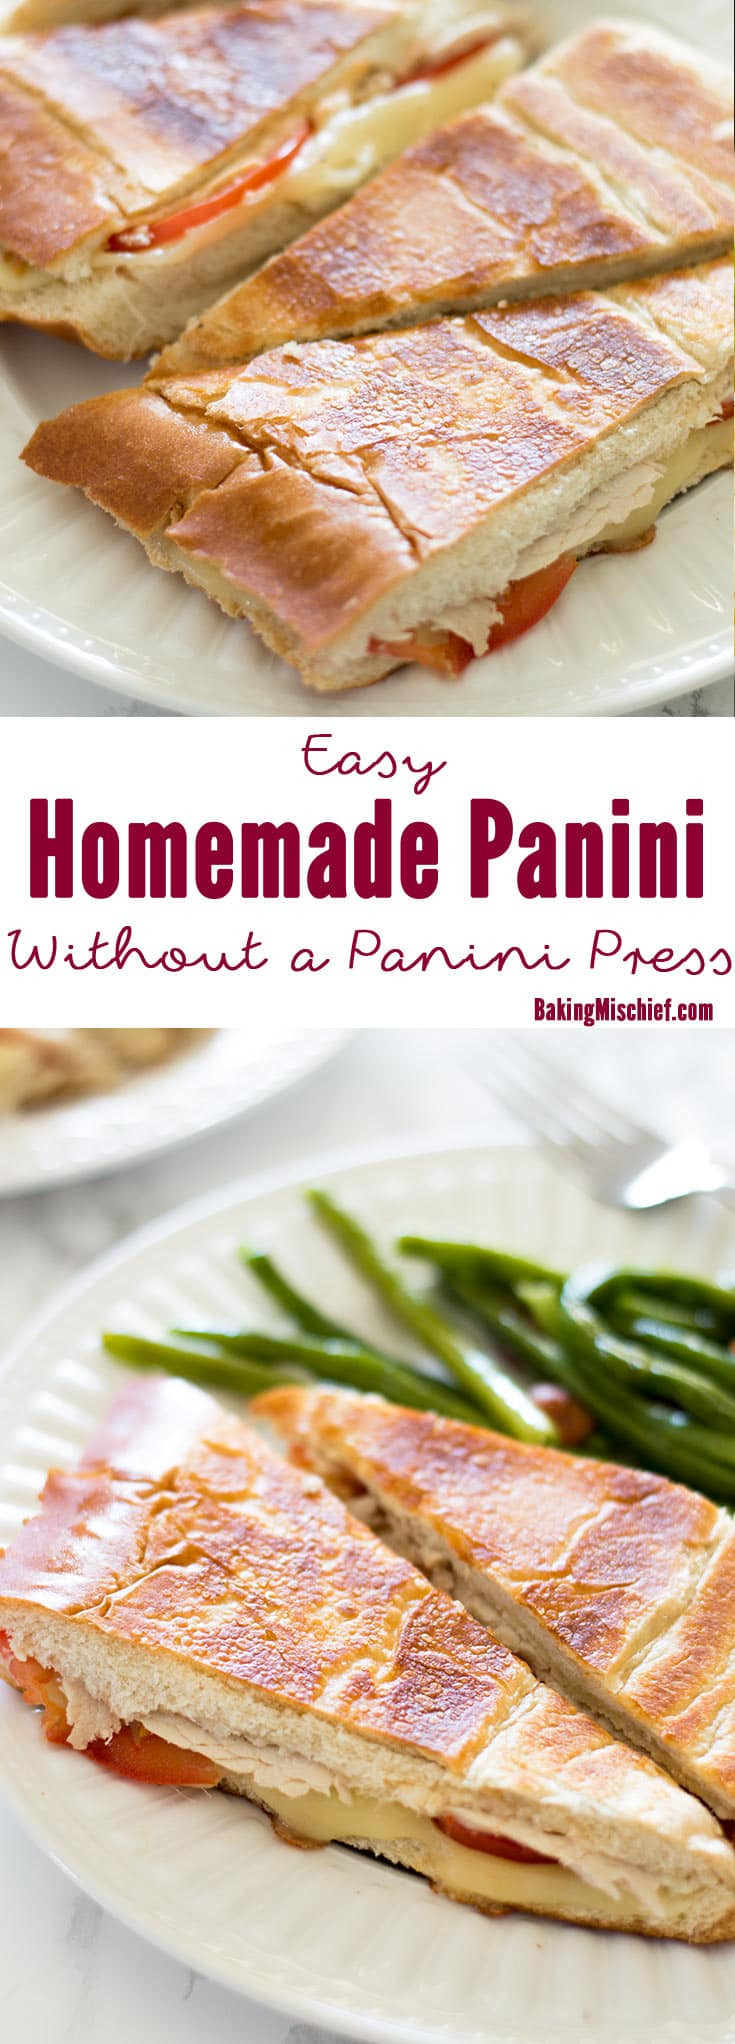 Simple Panini Recipes
 Easy Homemade Panini Without a Panini Press